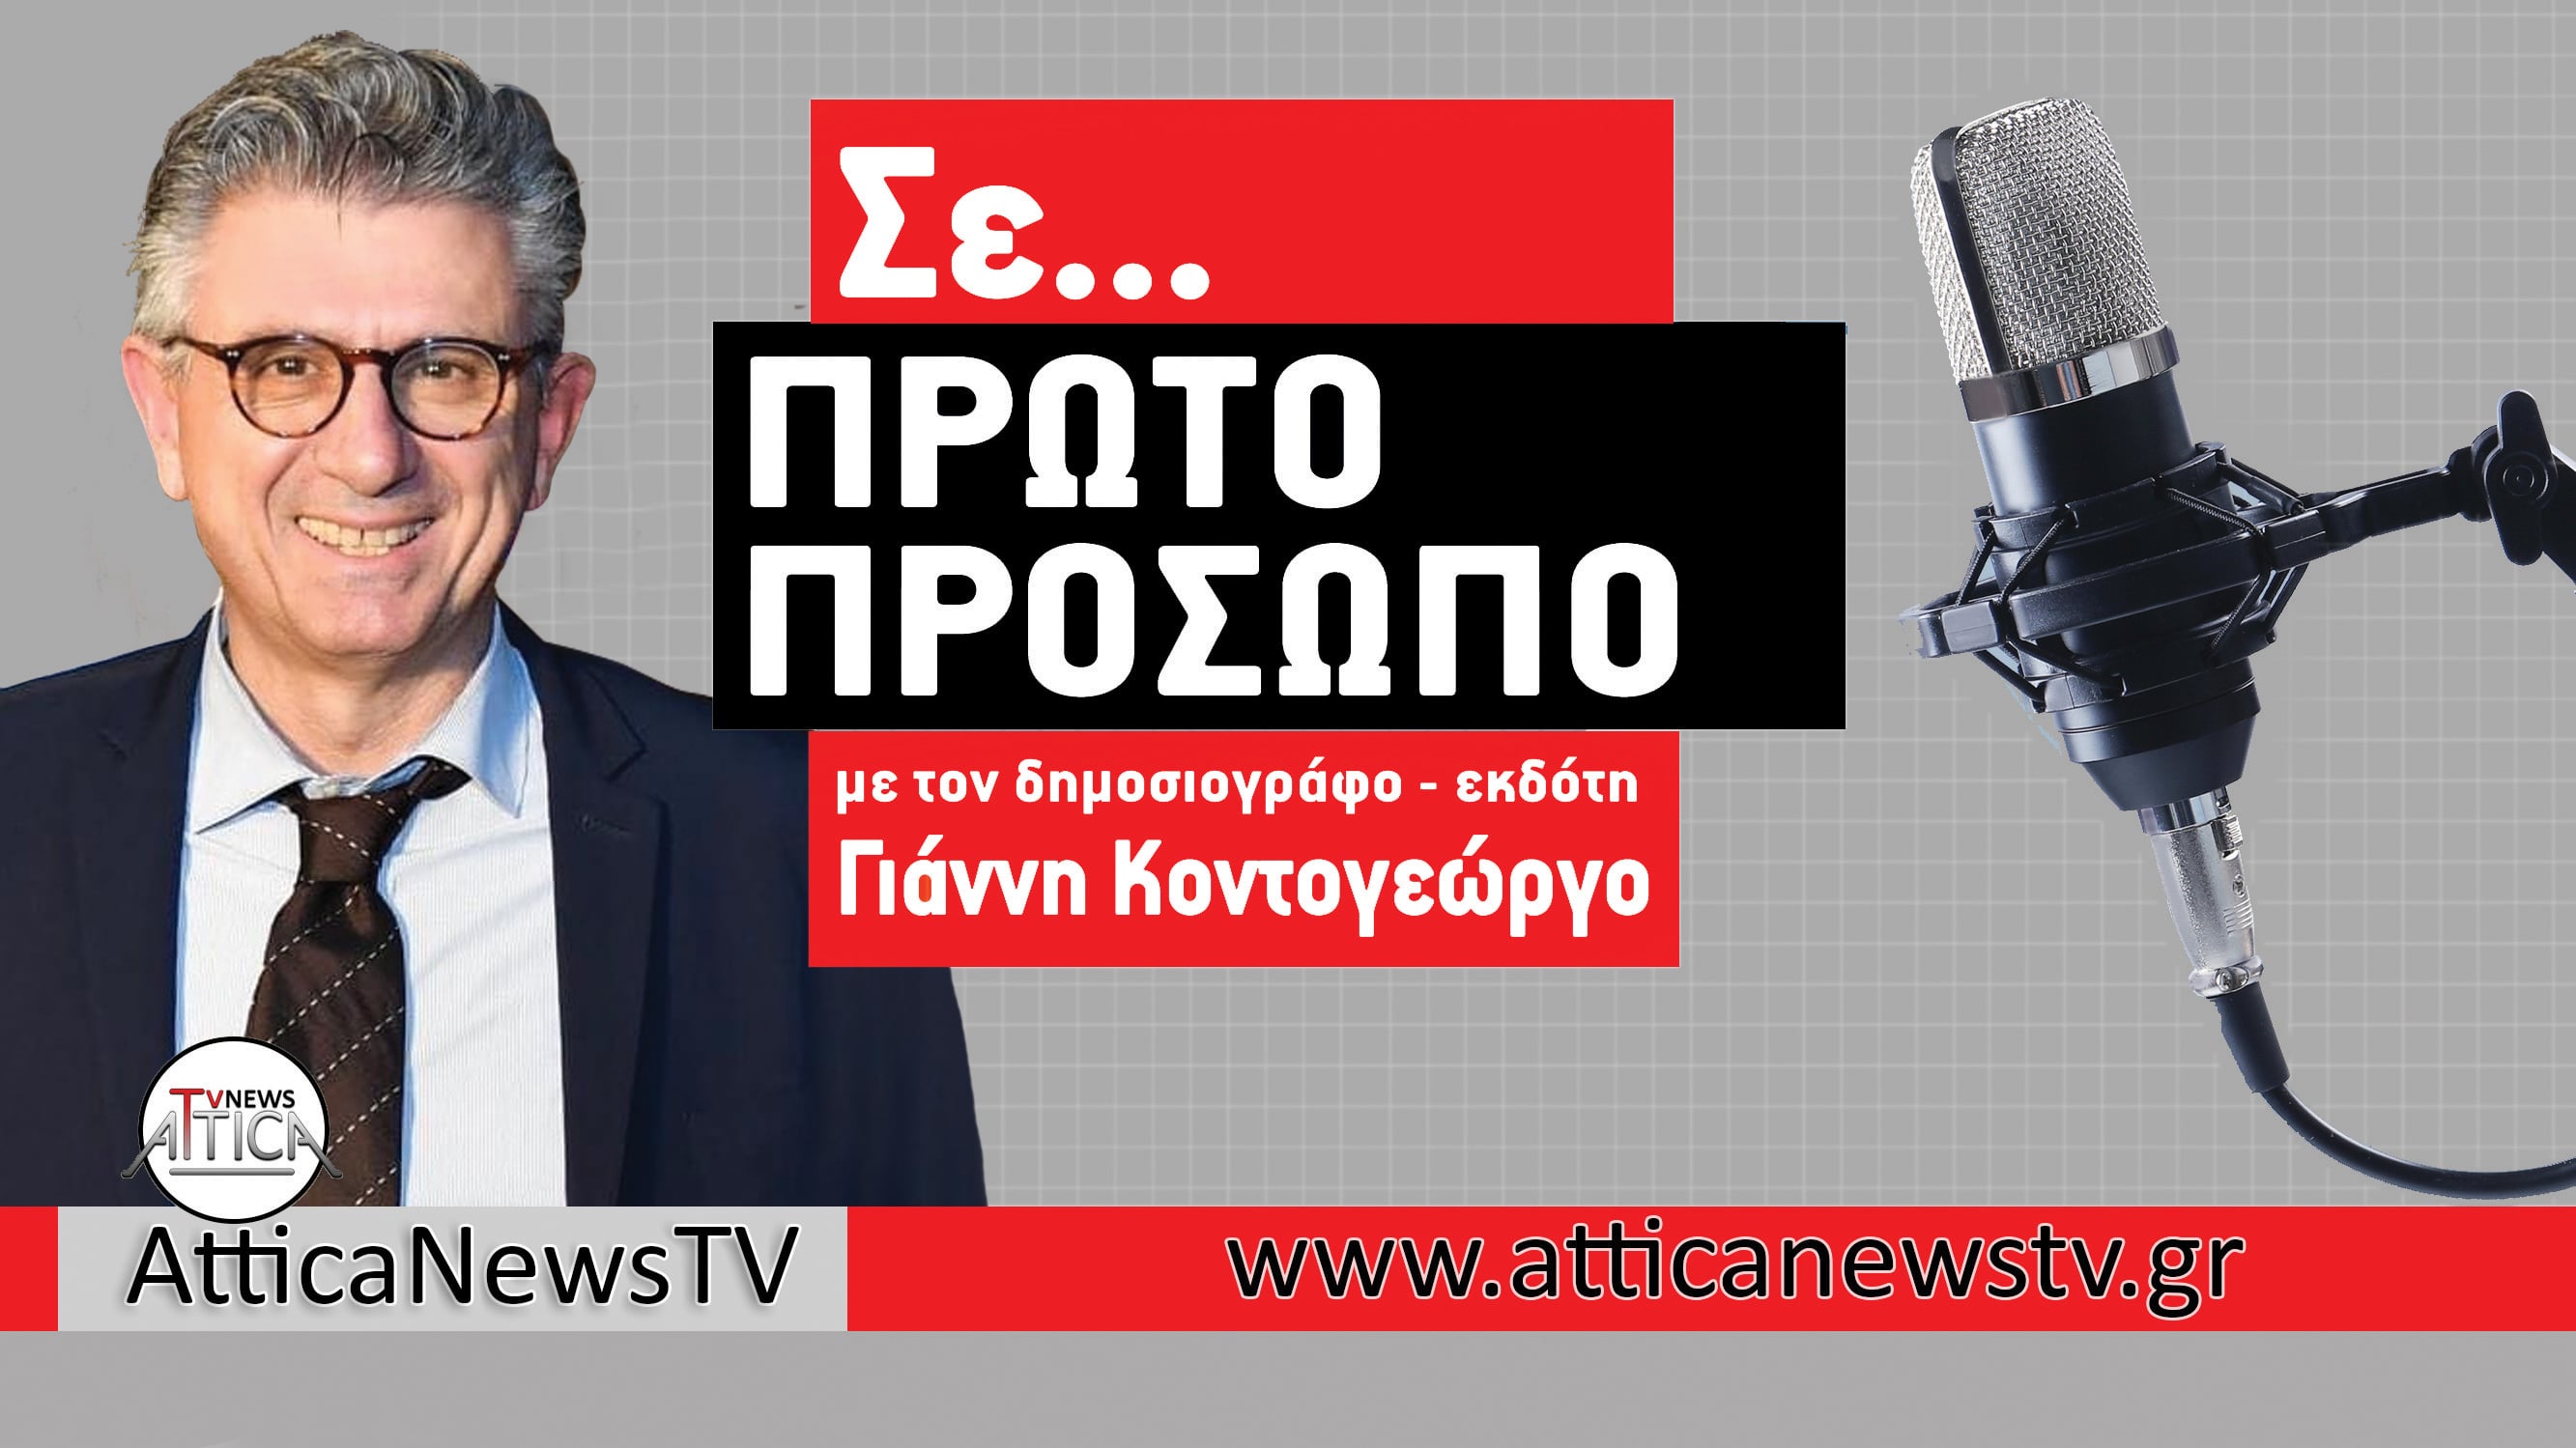 AtticaNewsTV_Se...PROTO-PROSOPO_NEW